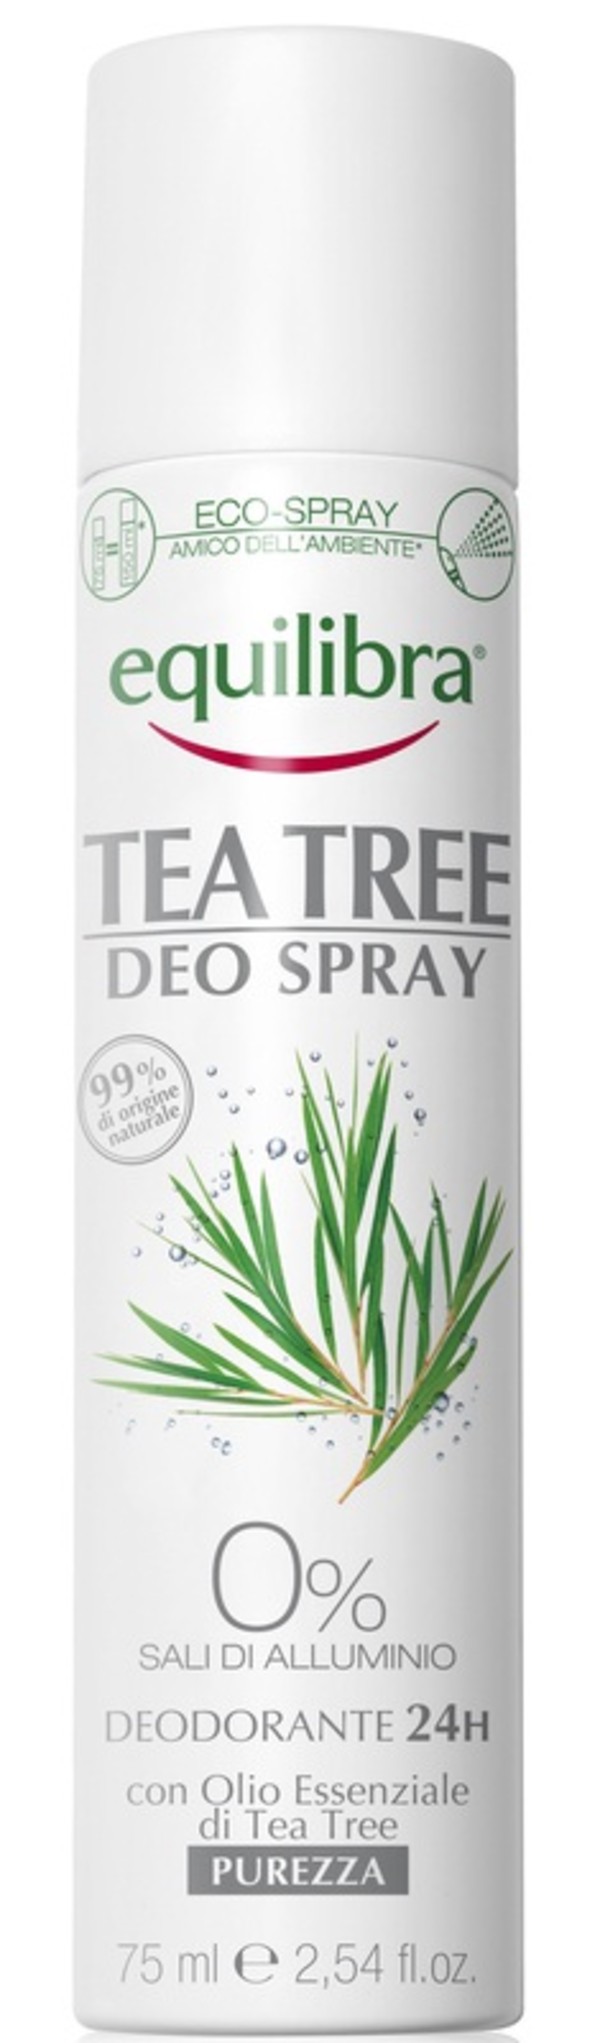 Dezodorant Tea tree